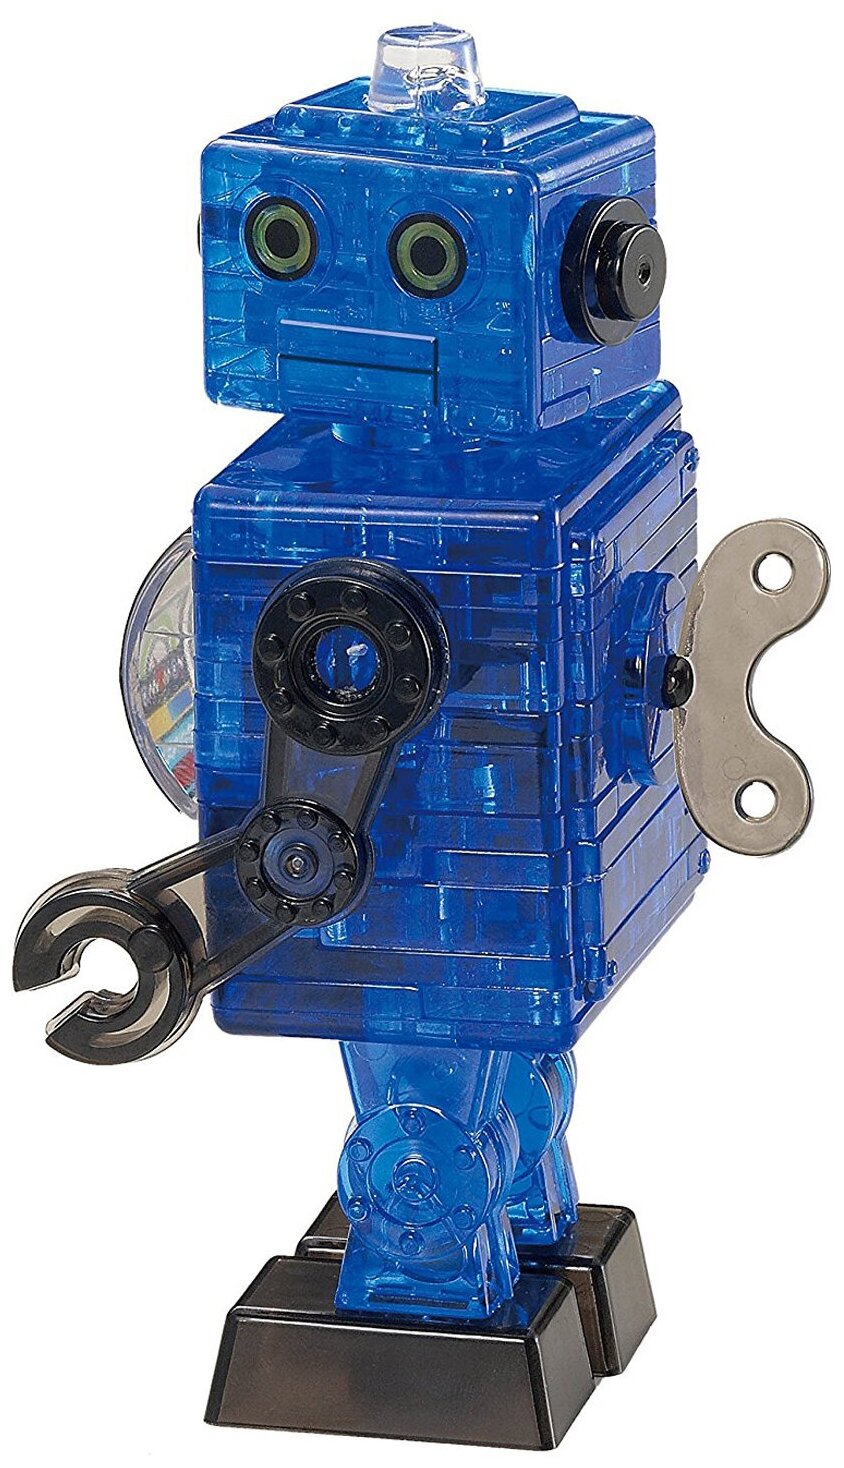 Головоломка 3D Crystal Puzzle Робот cиний цвет: синий - фото №3